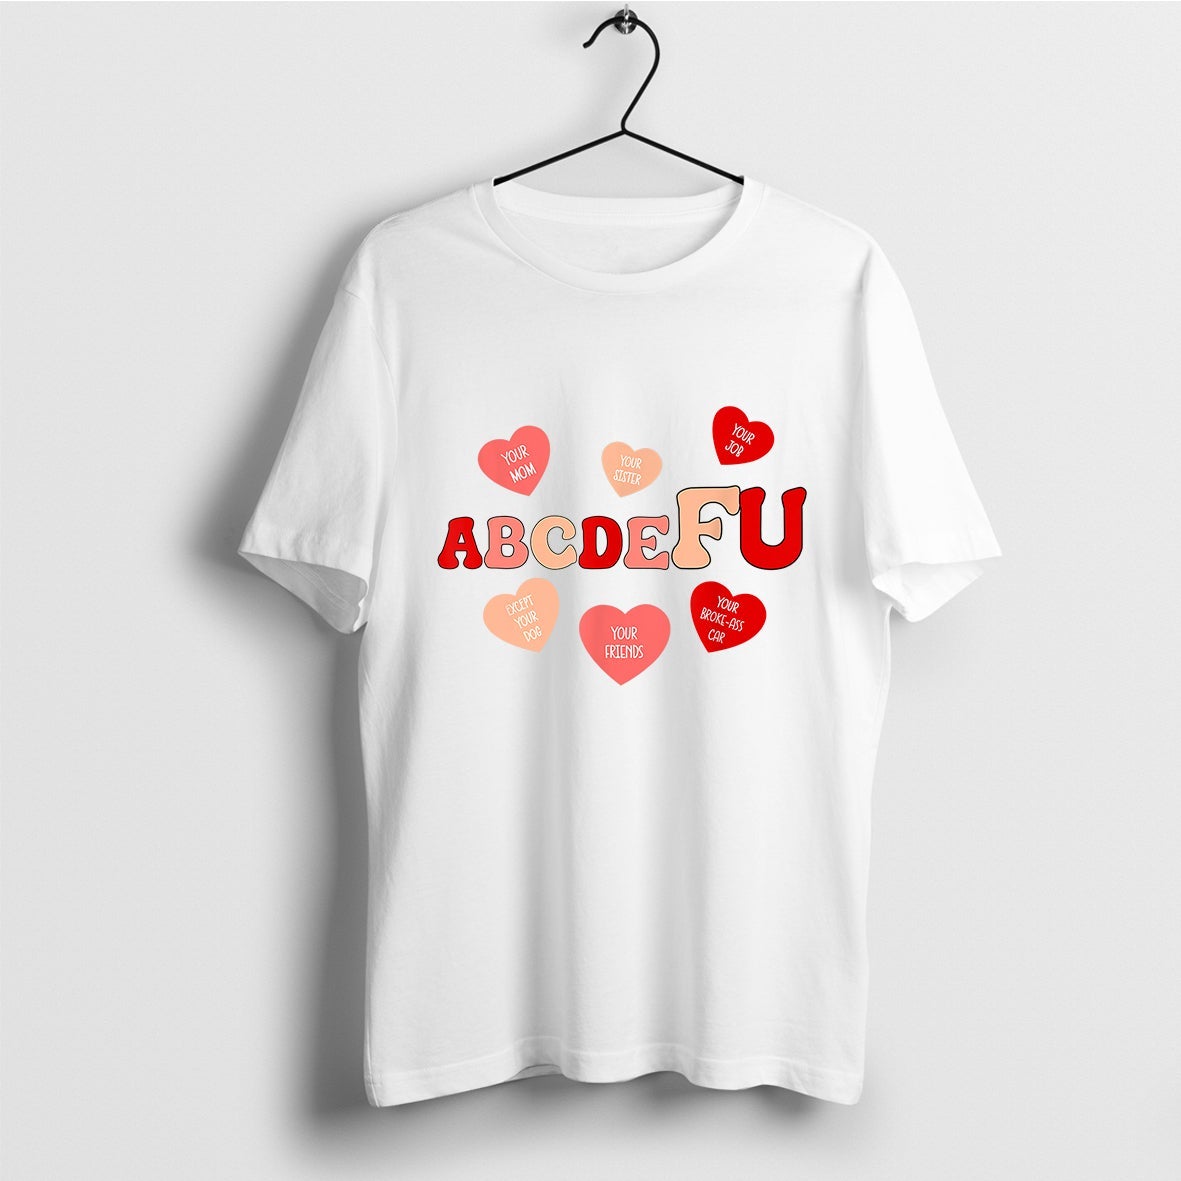 ABCDEFU Love You Hearts T-Shirt, Conversation Hearts Shirt, Anti Valentine Day, Funny Song Lyric Saying Shirt